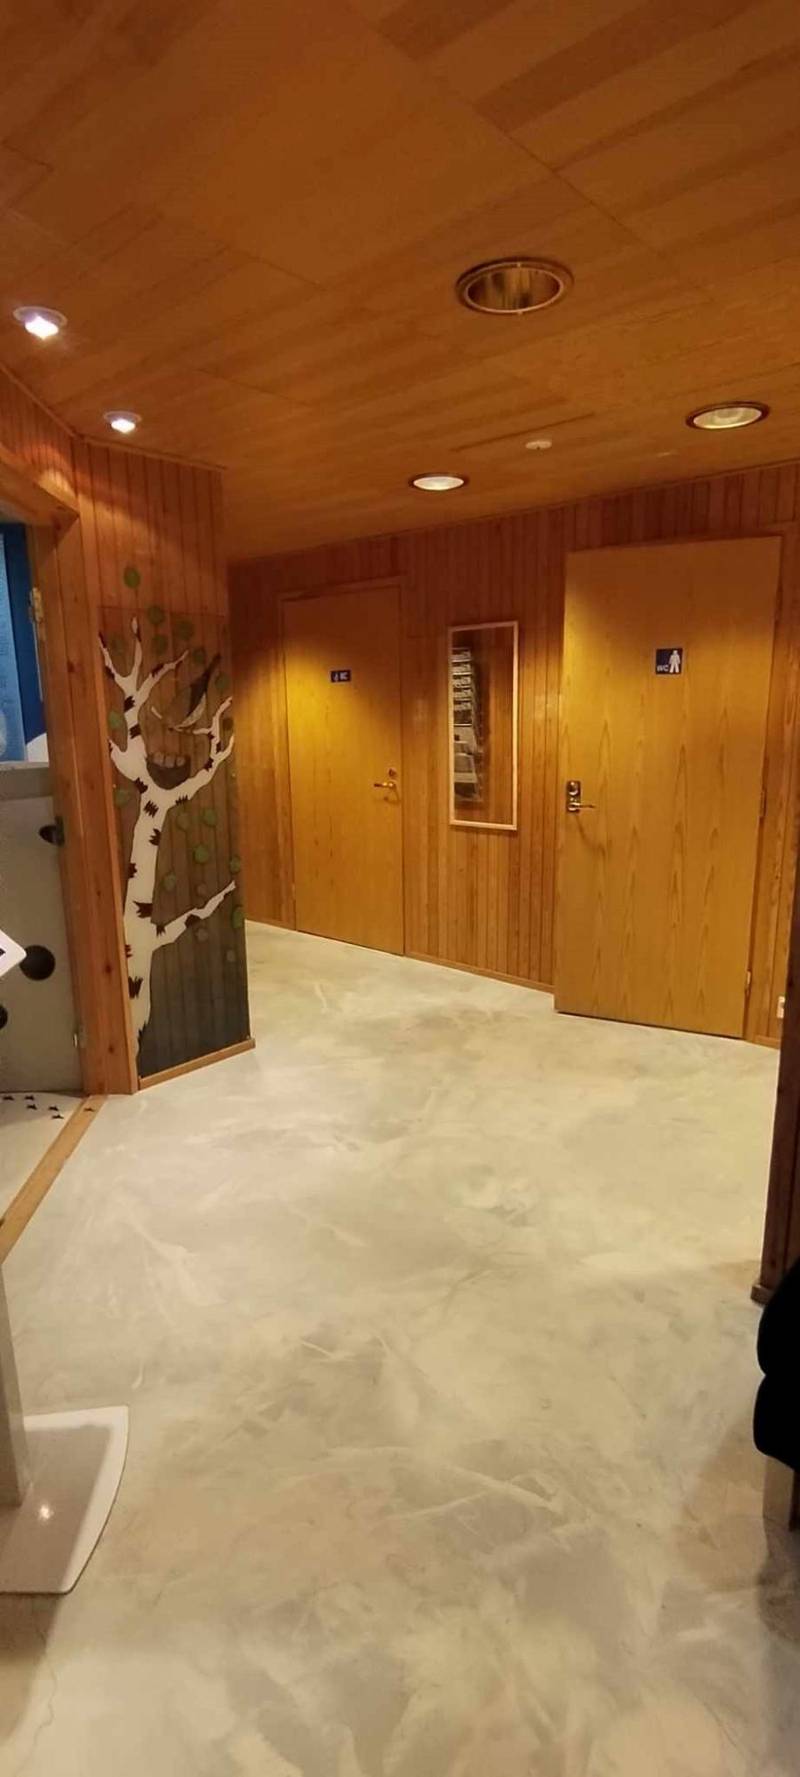 Two doors inside Tunturi-Lapin luontokeskus, leading to two wheelchair accessible bathrooms